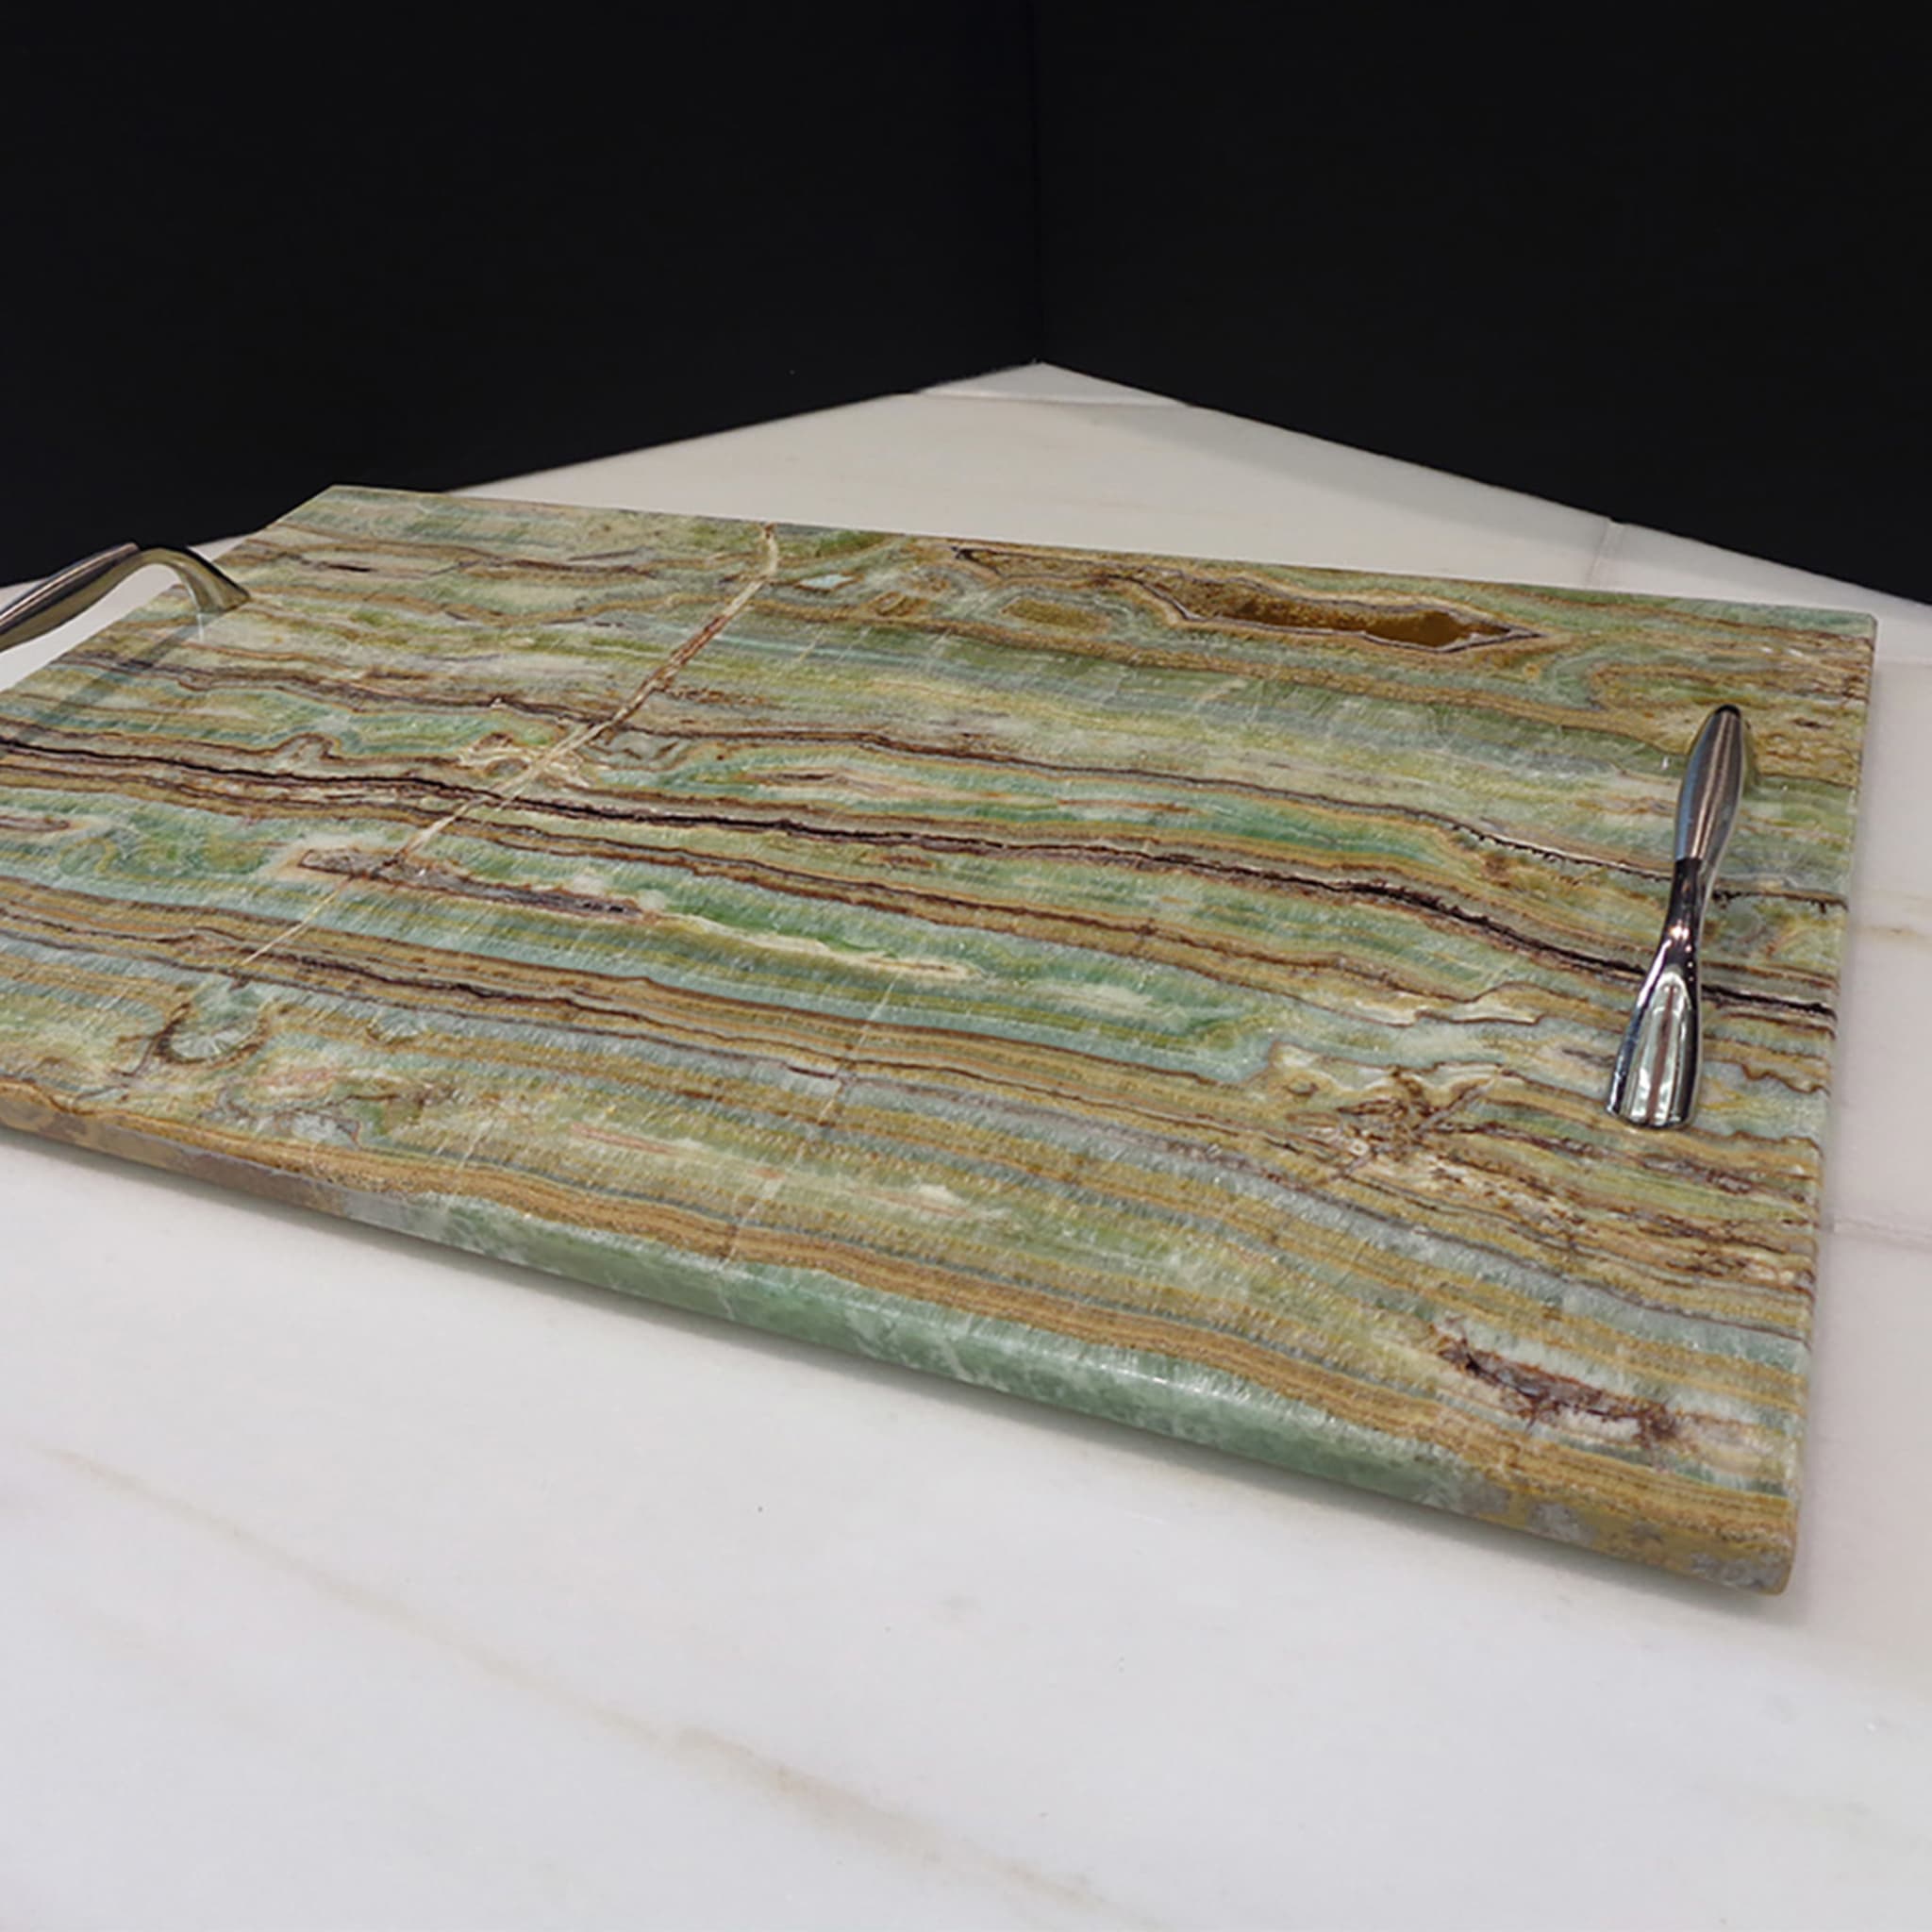 Rectangular Emerald Onyx Tray with Steel Handles #3 - Alternative view 2